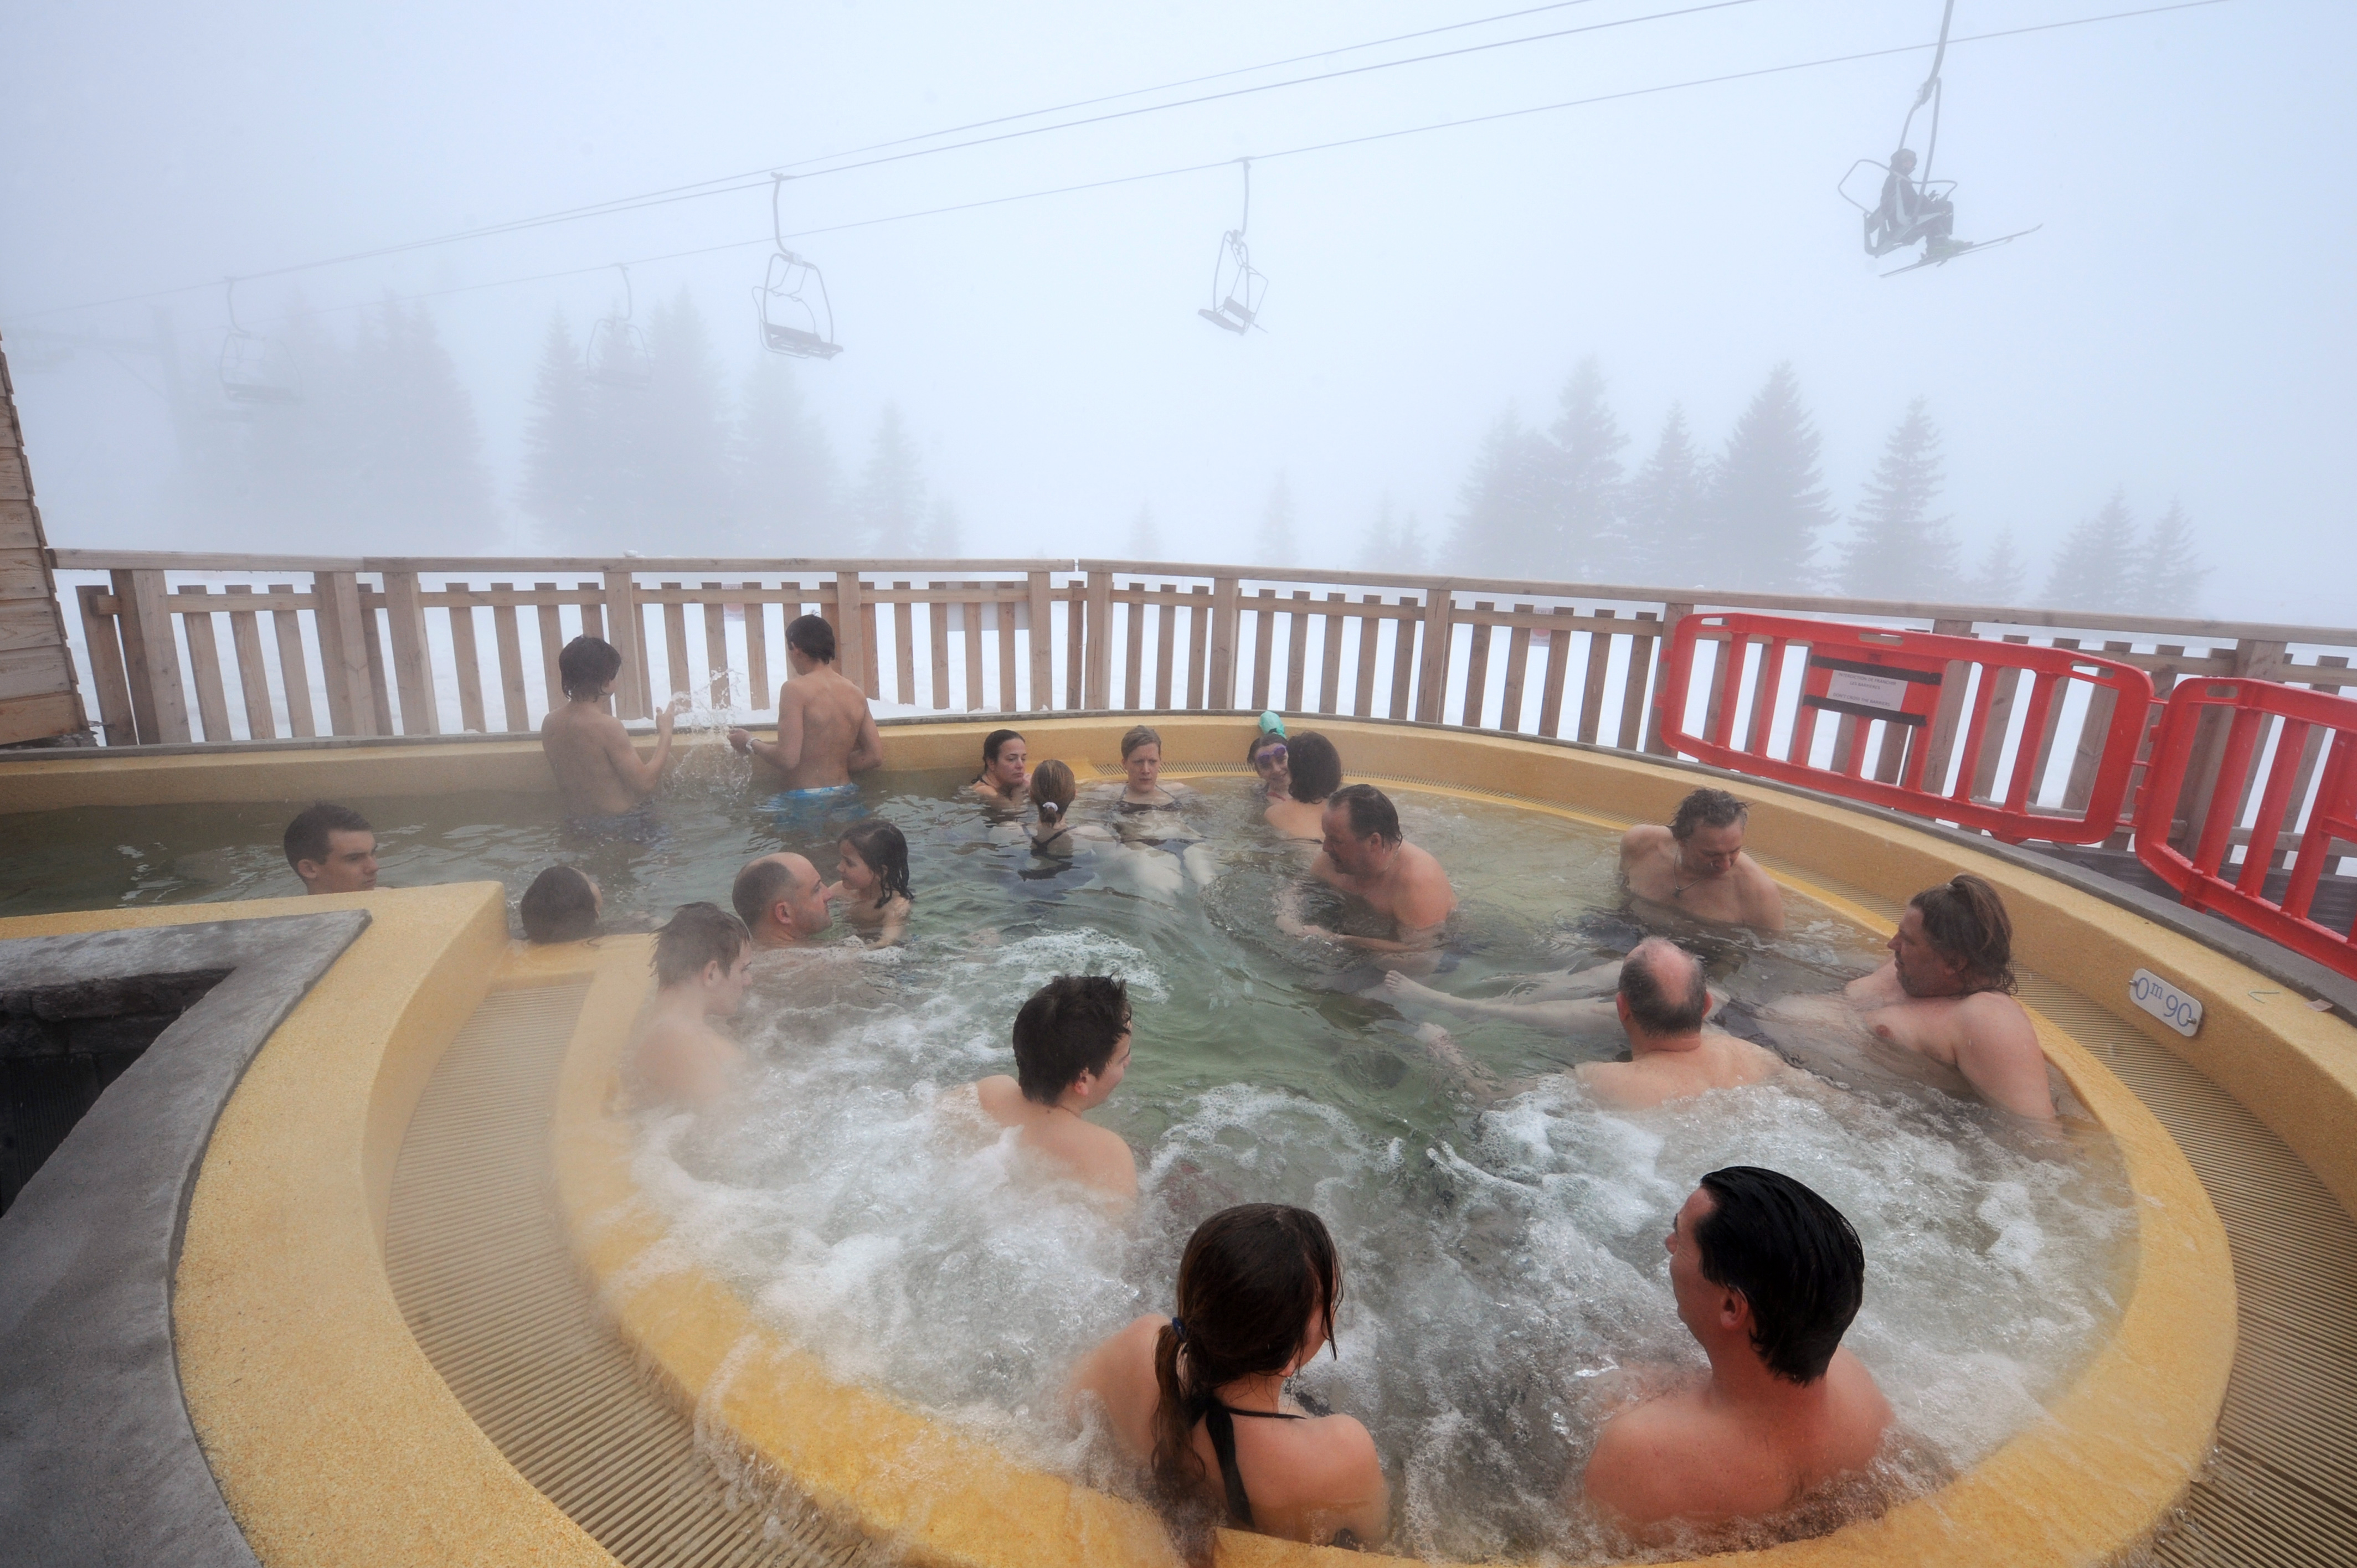 Hot Tubs Spas Can Spread Illness In Winter Cbs News